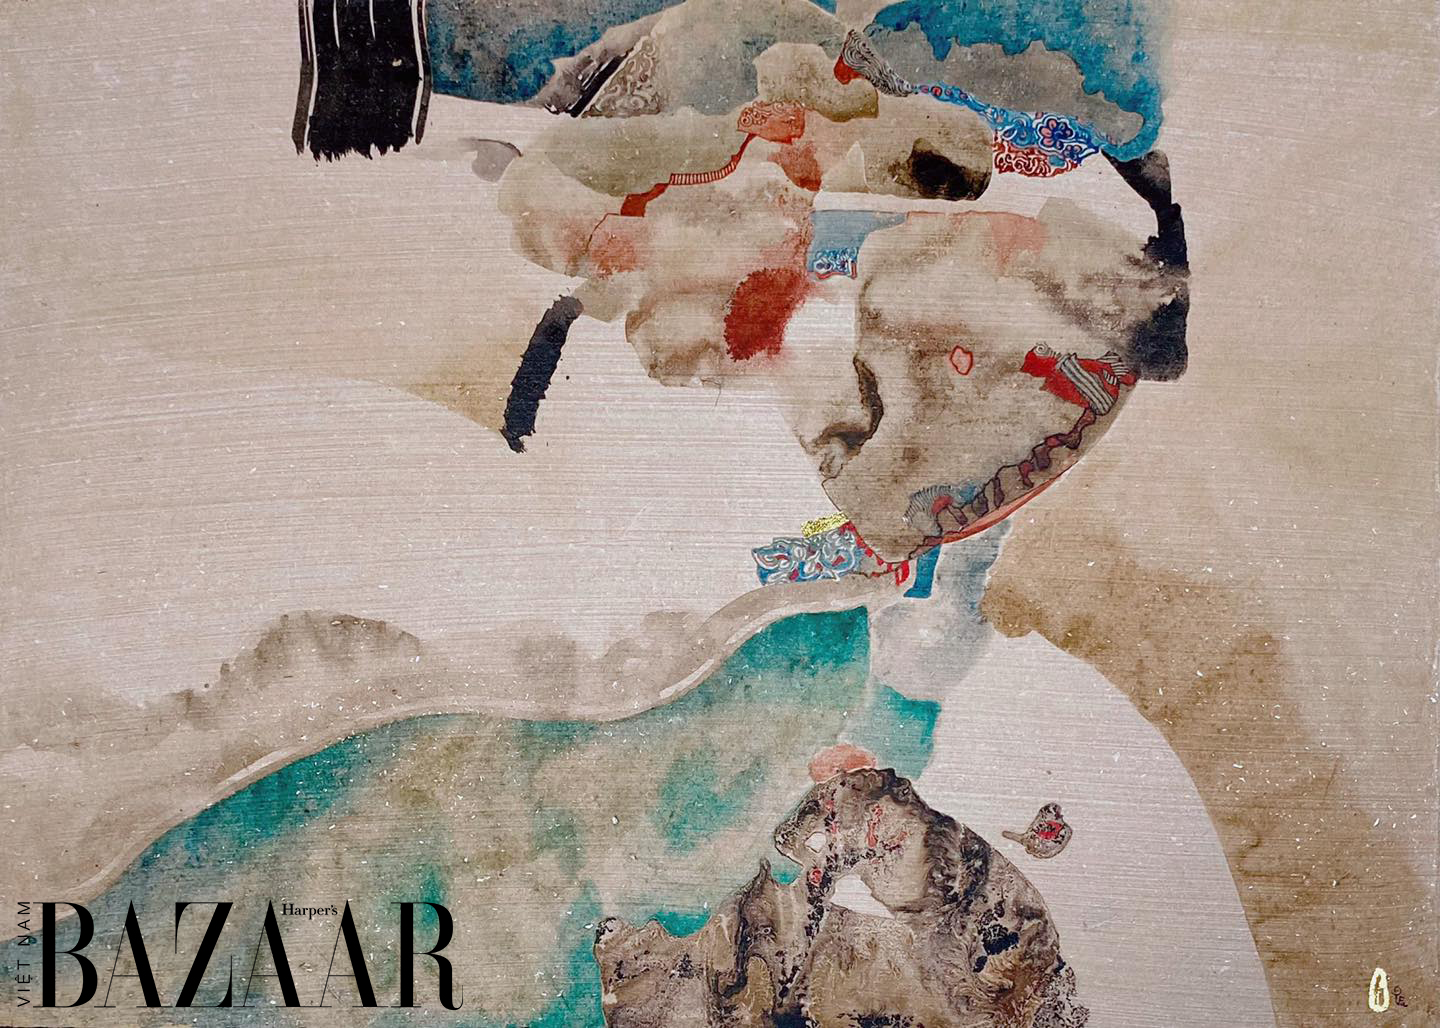 Harper's Bazaar_triển lãm Mifa ĐIỆP Sparkling of scallop paper_04